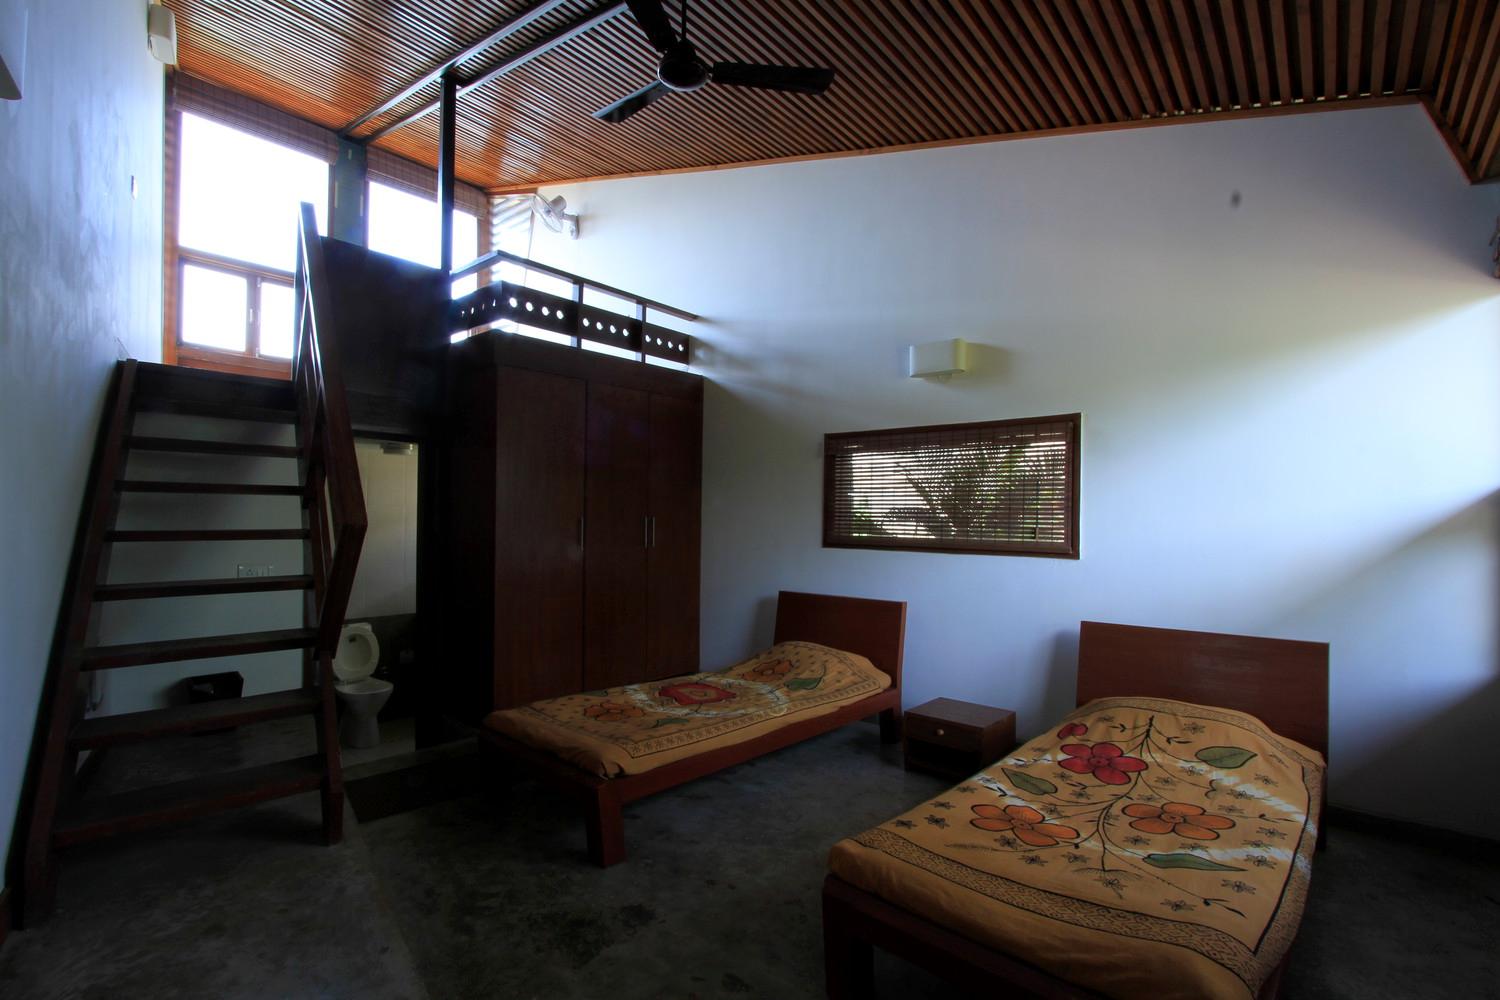 Cottage interior - split in 2 levels